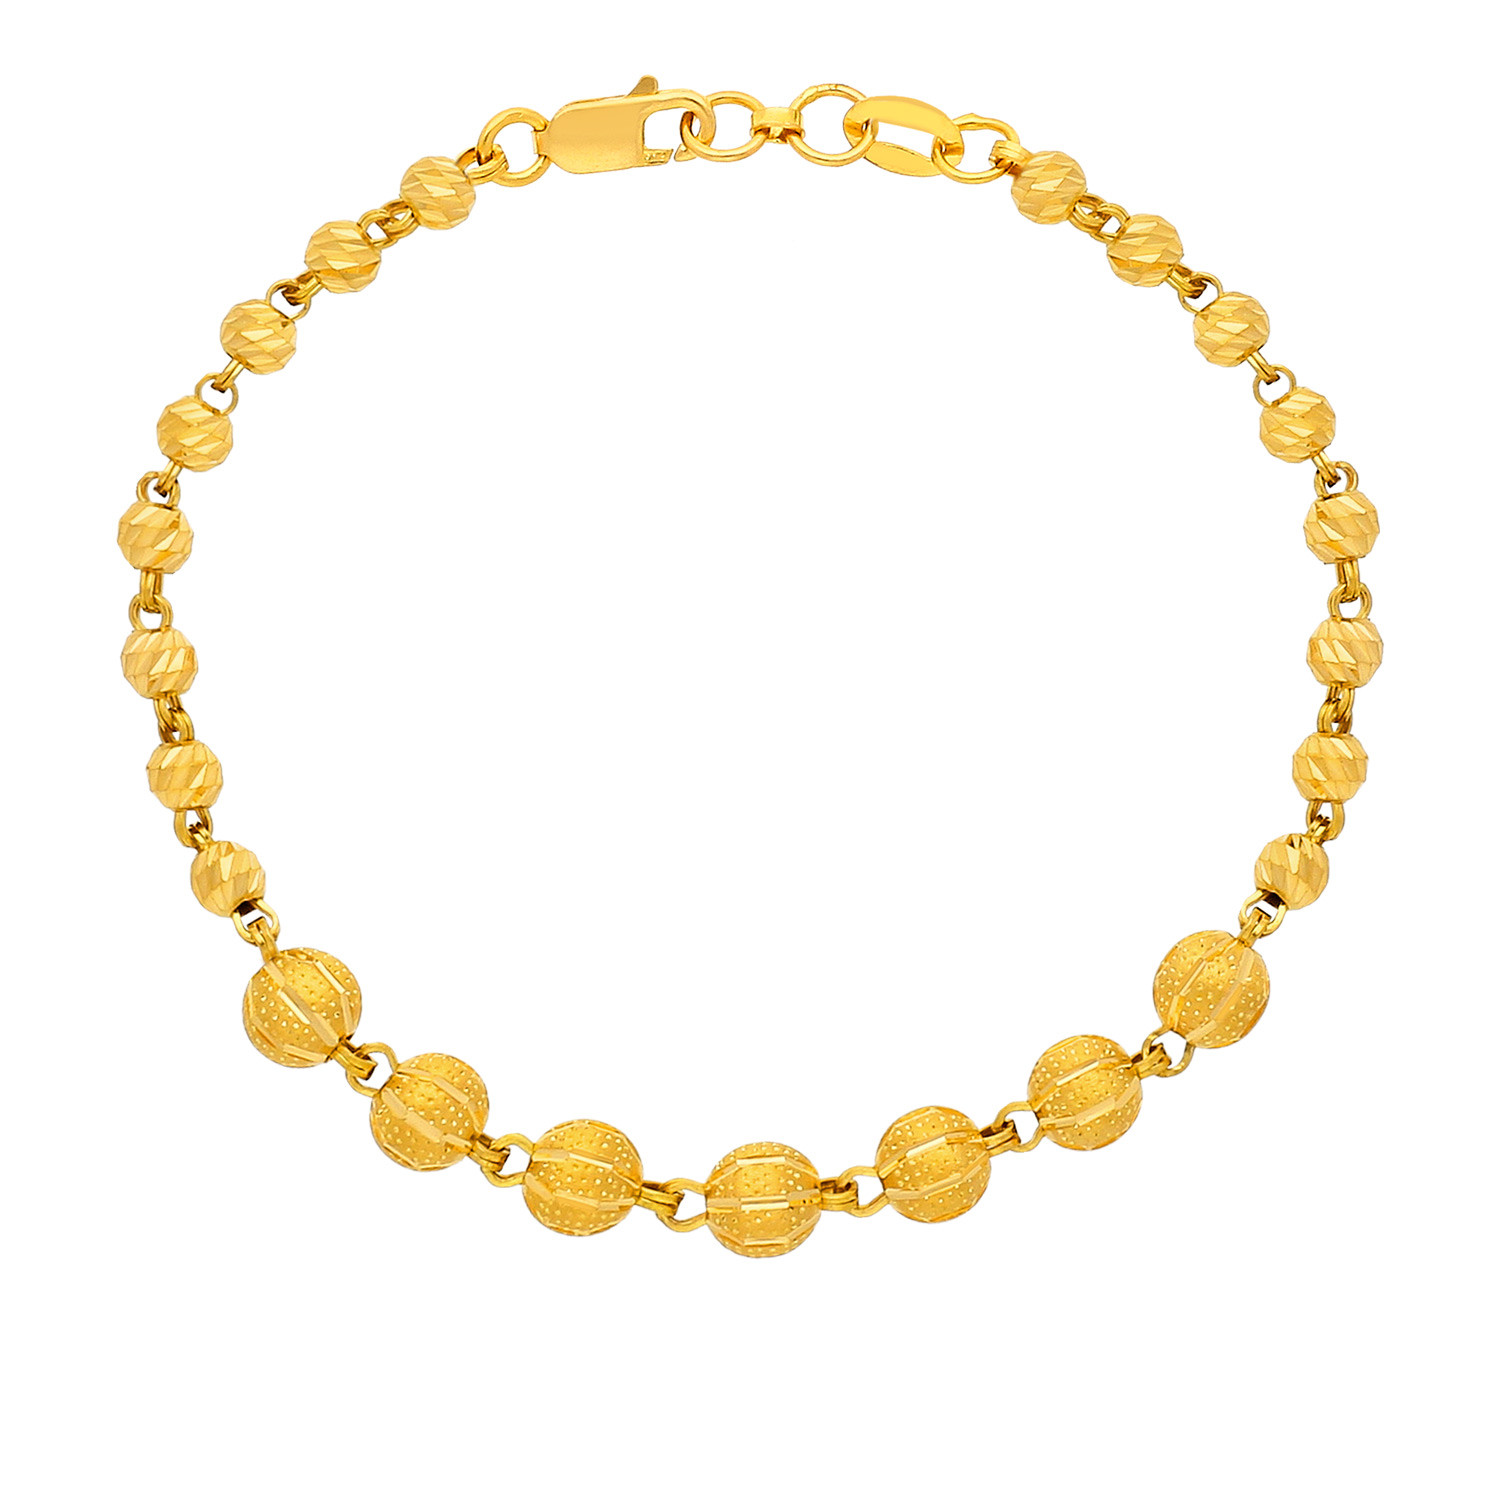 Malabar Gold Jewellery Bracelet Designs Deals - www.illva.com 1693444936